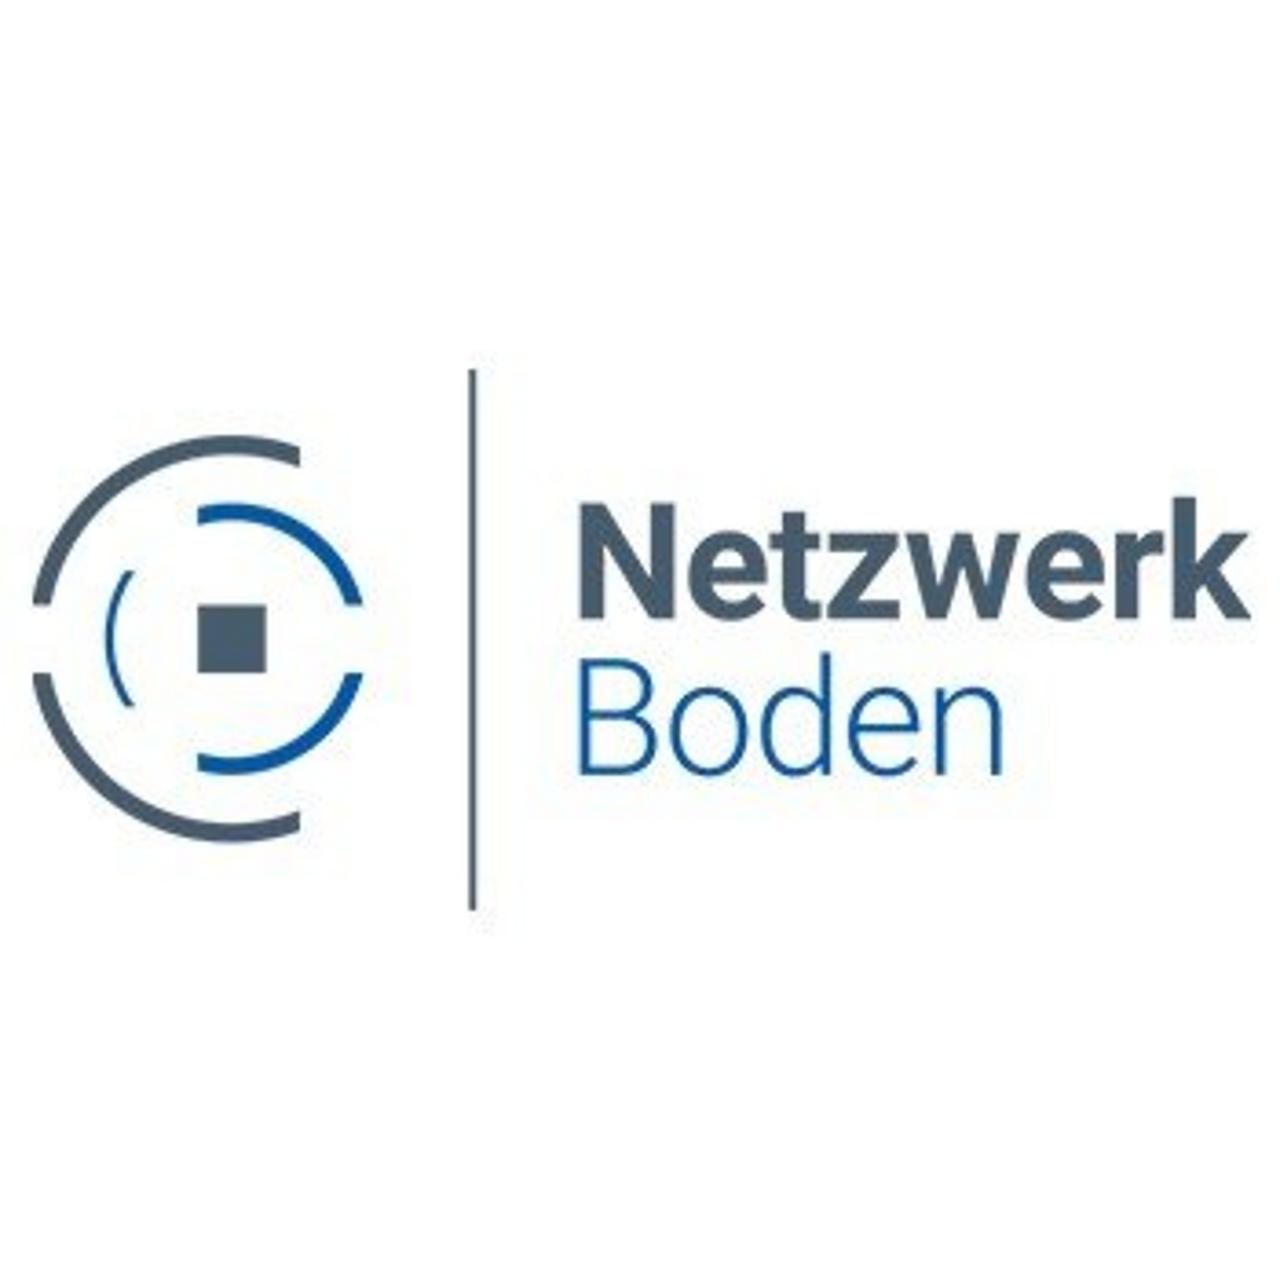 Netzwerk Boden Heiligenhaus, Essen – Kettwig , Ratingen – Hösel, Ratingen – Homberg, Ratingen - Lintorf, Mettmann, Wülfrath